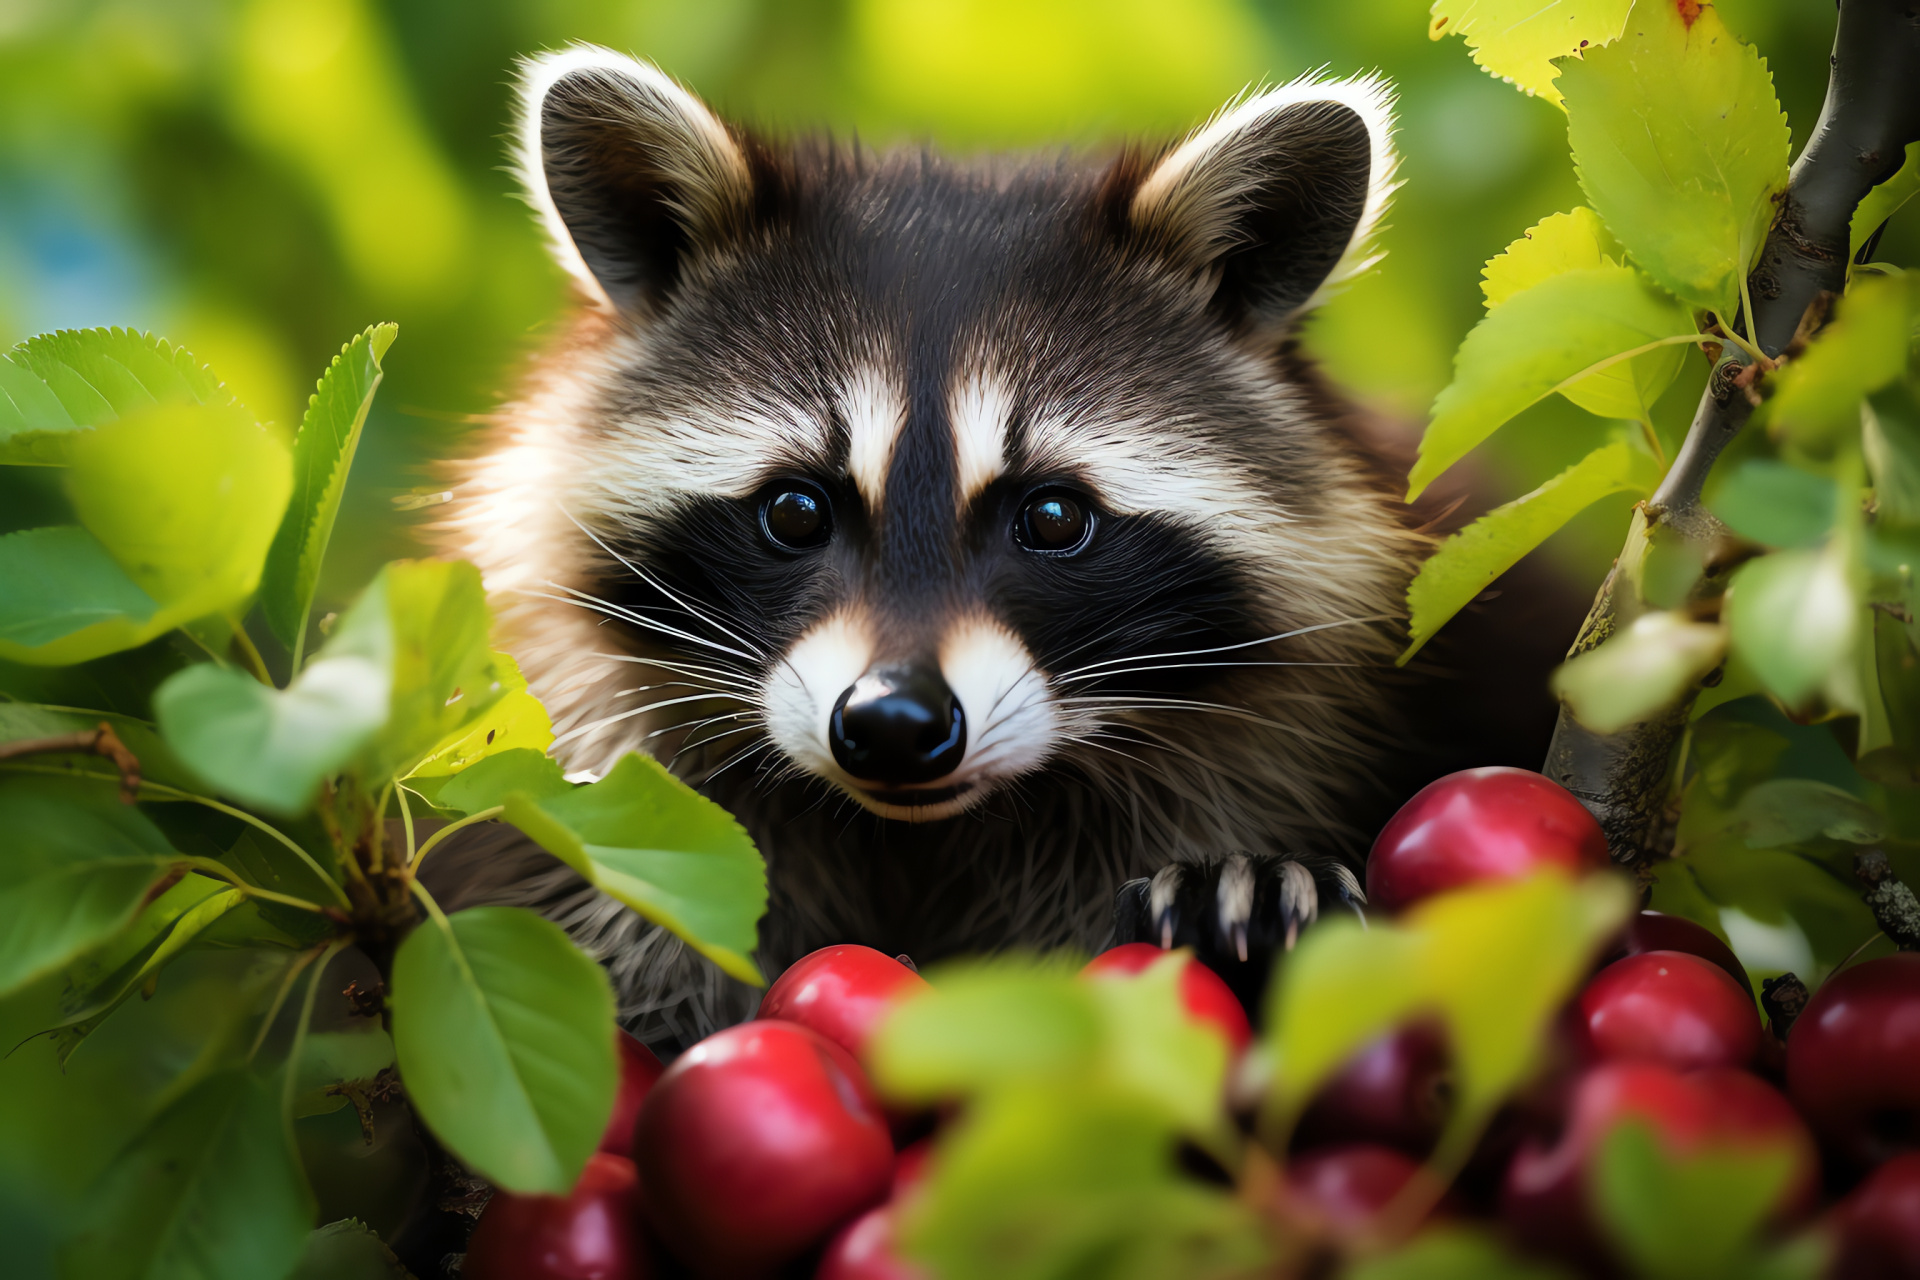 Raccoon, animal adaptability, intelligent behavior, suburban visitor, trash panda, HD Desktop Image